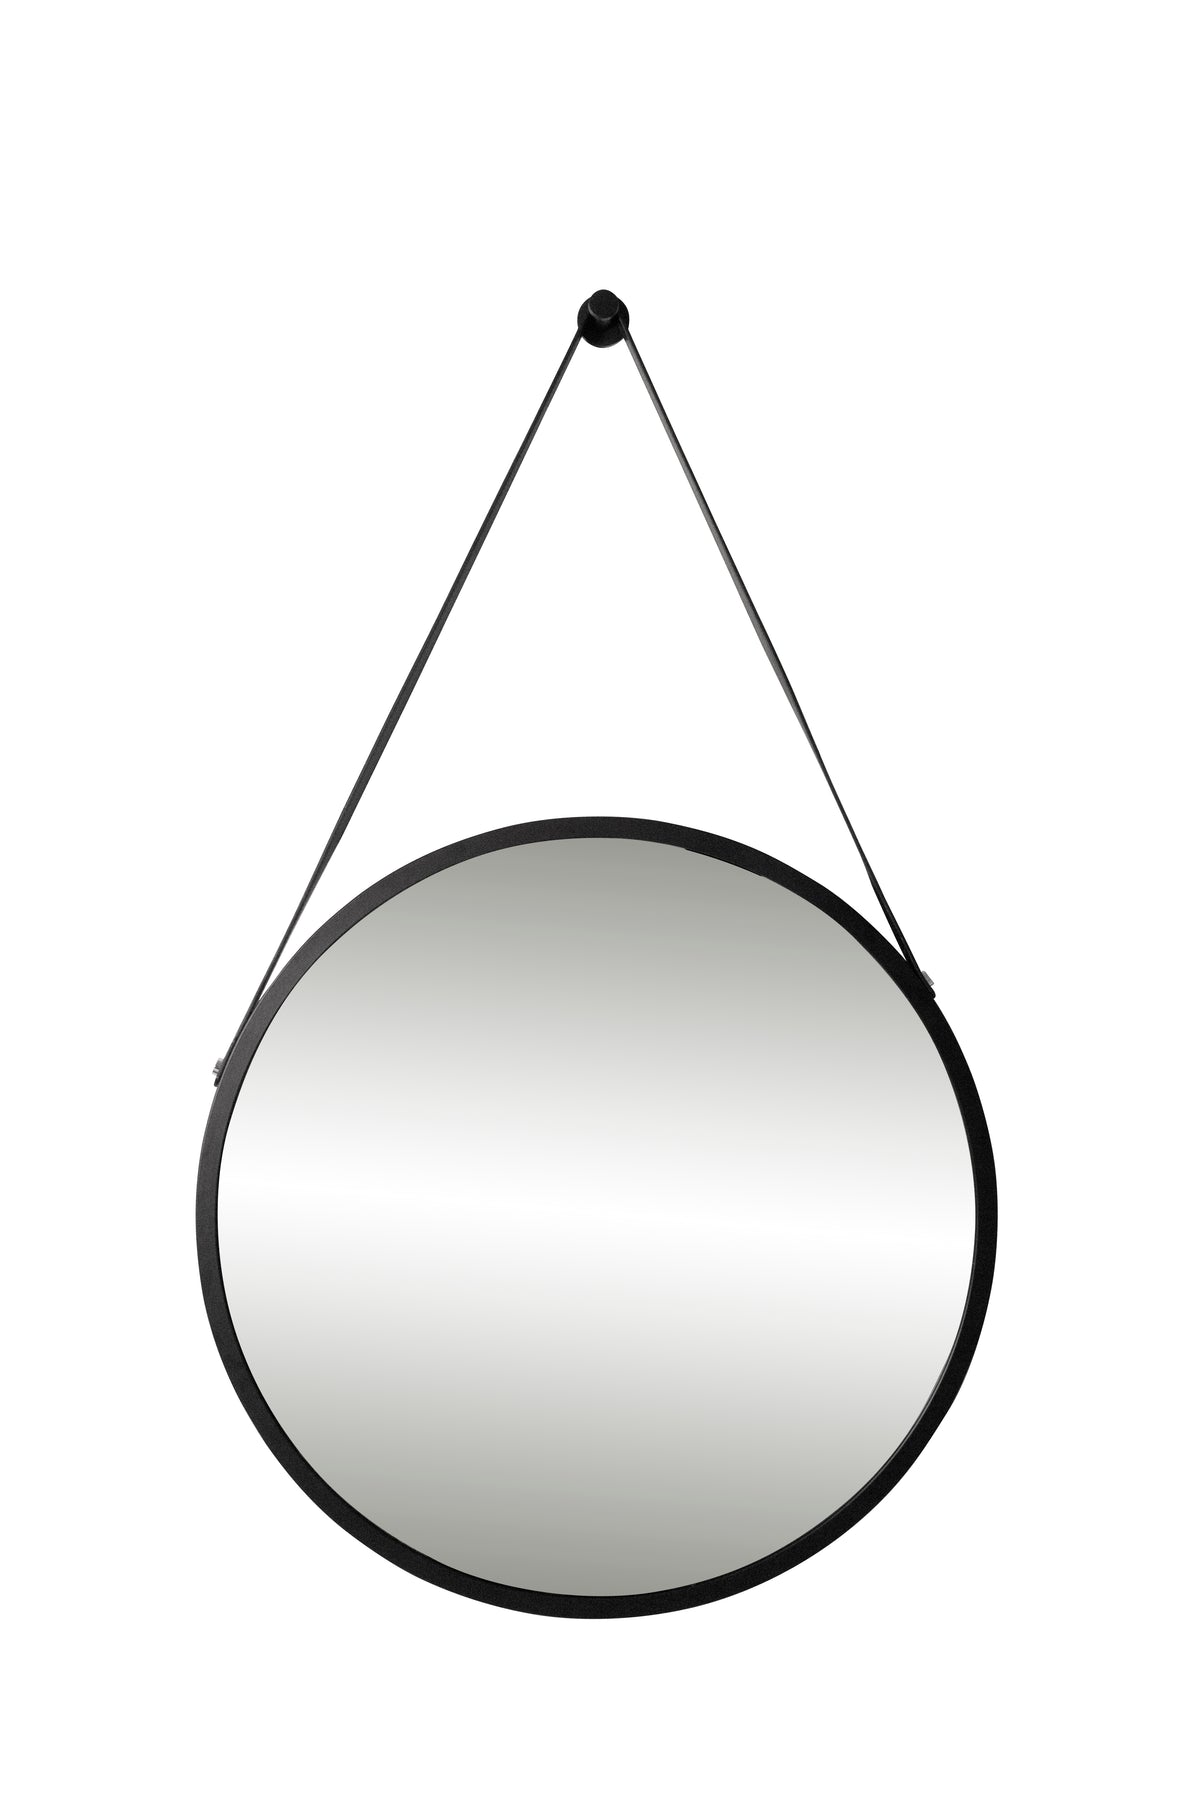 Oslo Round Black Leather Mirror - 600mm